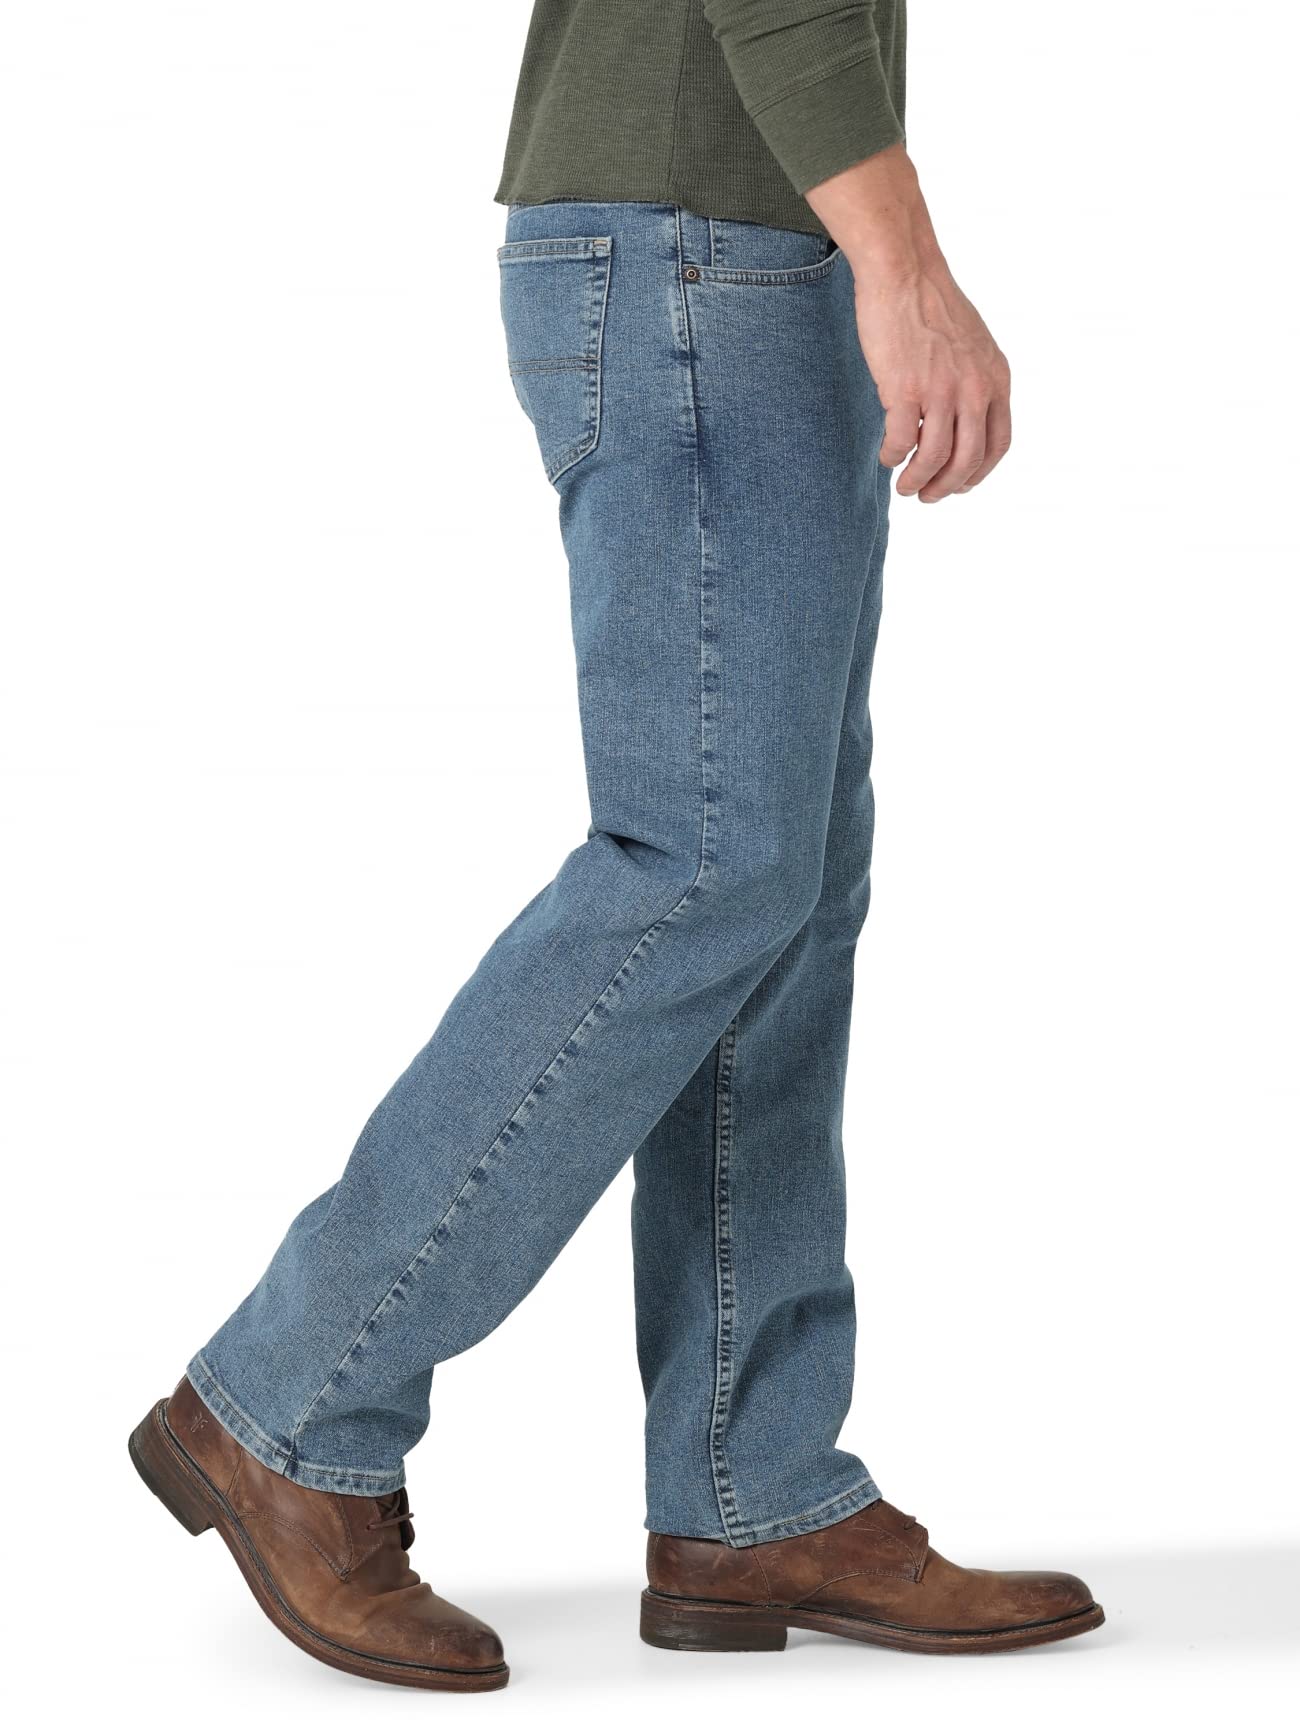 Wrangler Authentics Men's Regular Fit Comfort Flex Waist Jean, Light Stonewash, 33W x 30L